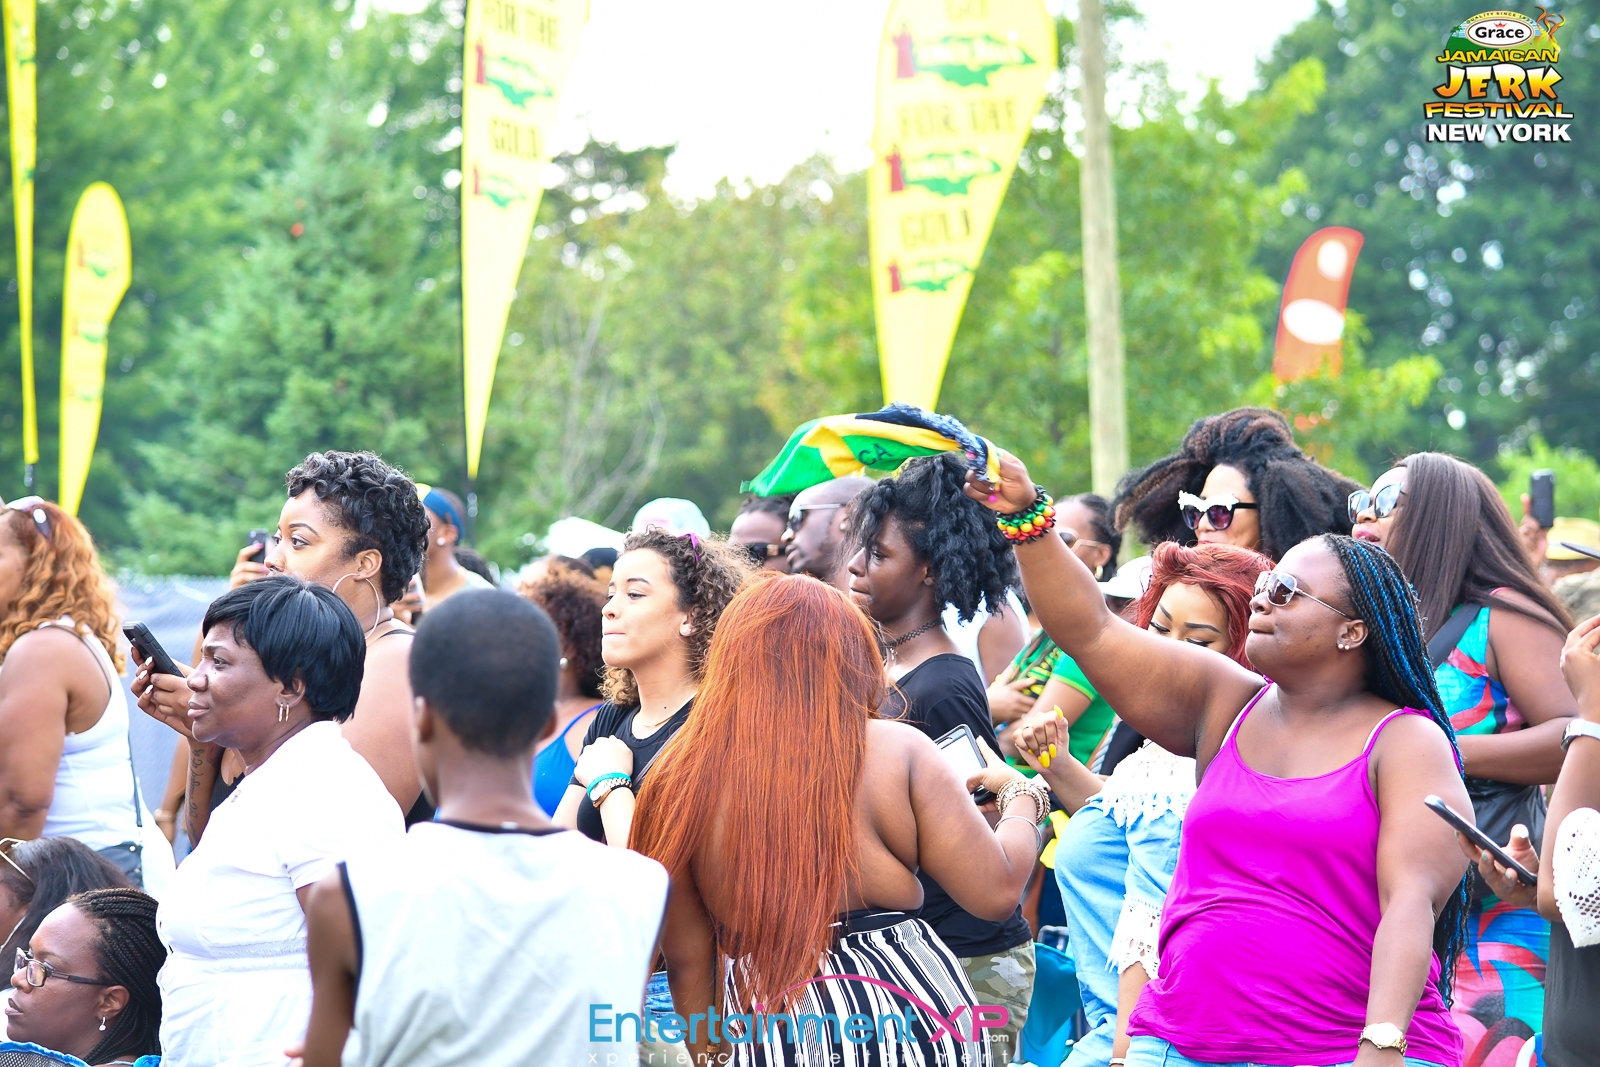 Grace Jamaican Jerk Festival New York